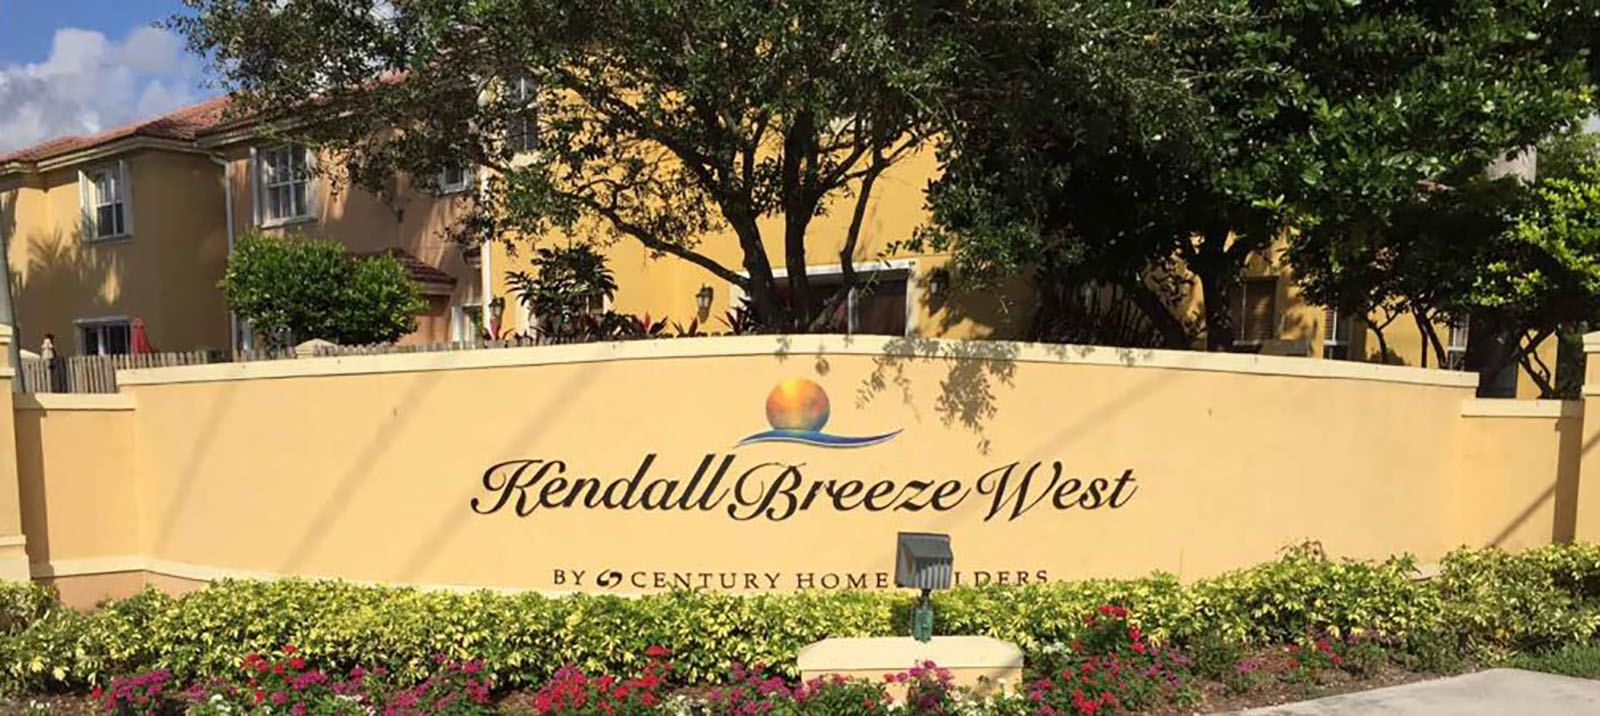 Kendall Breeze West CDD Home